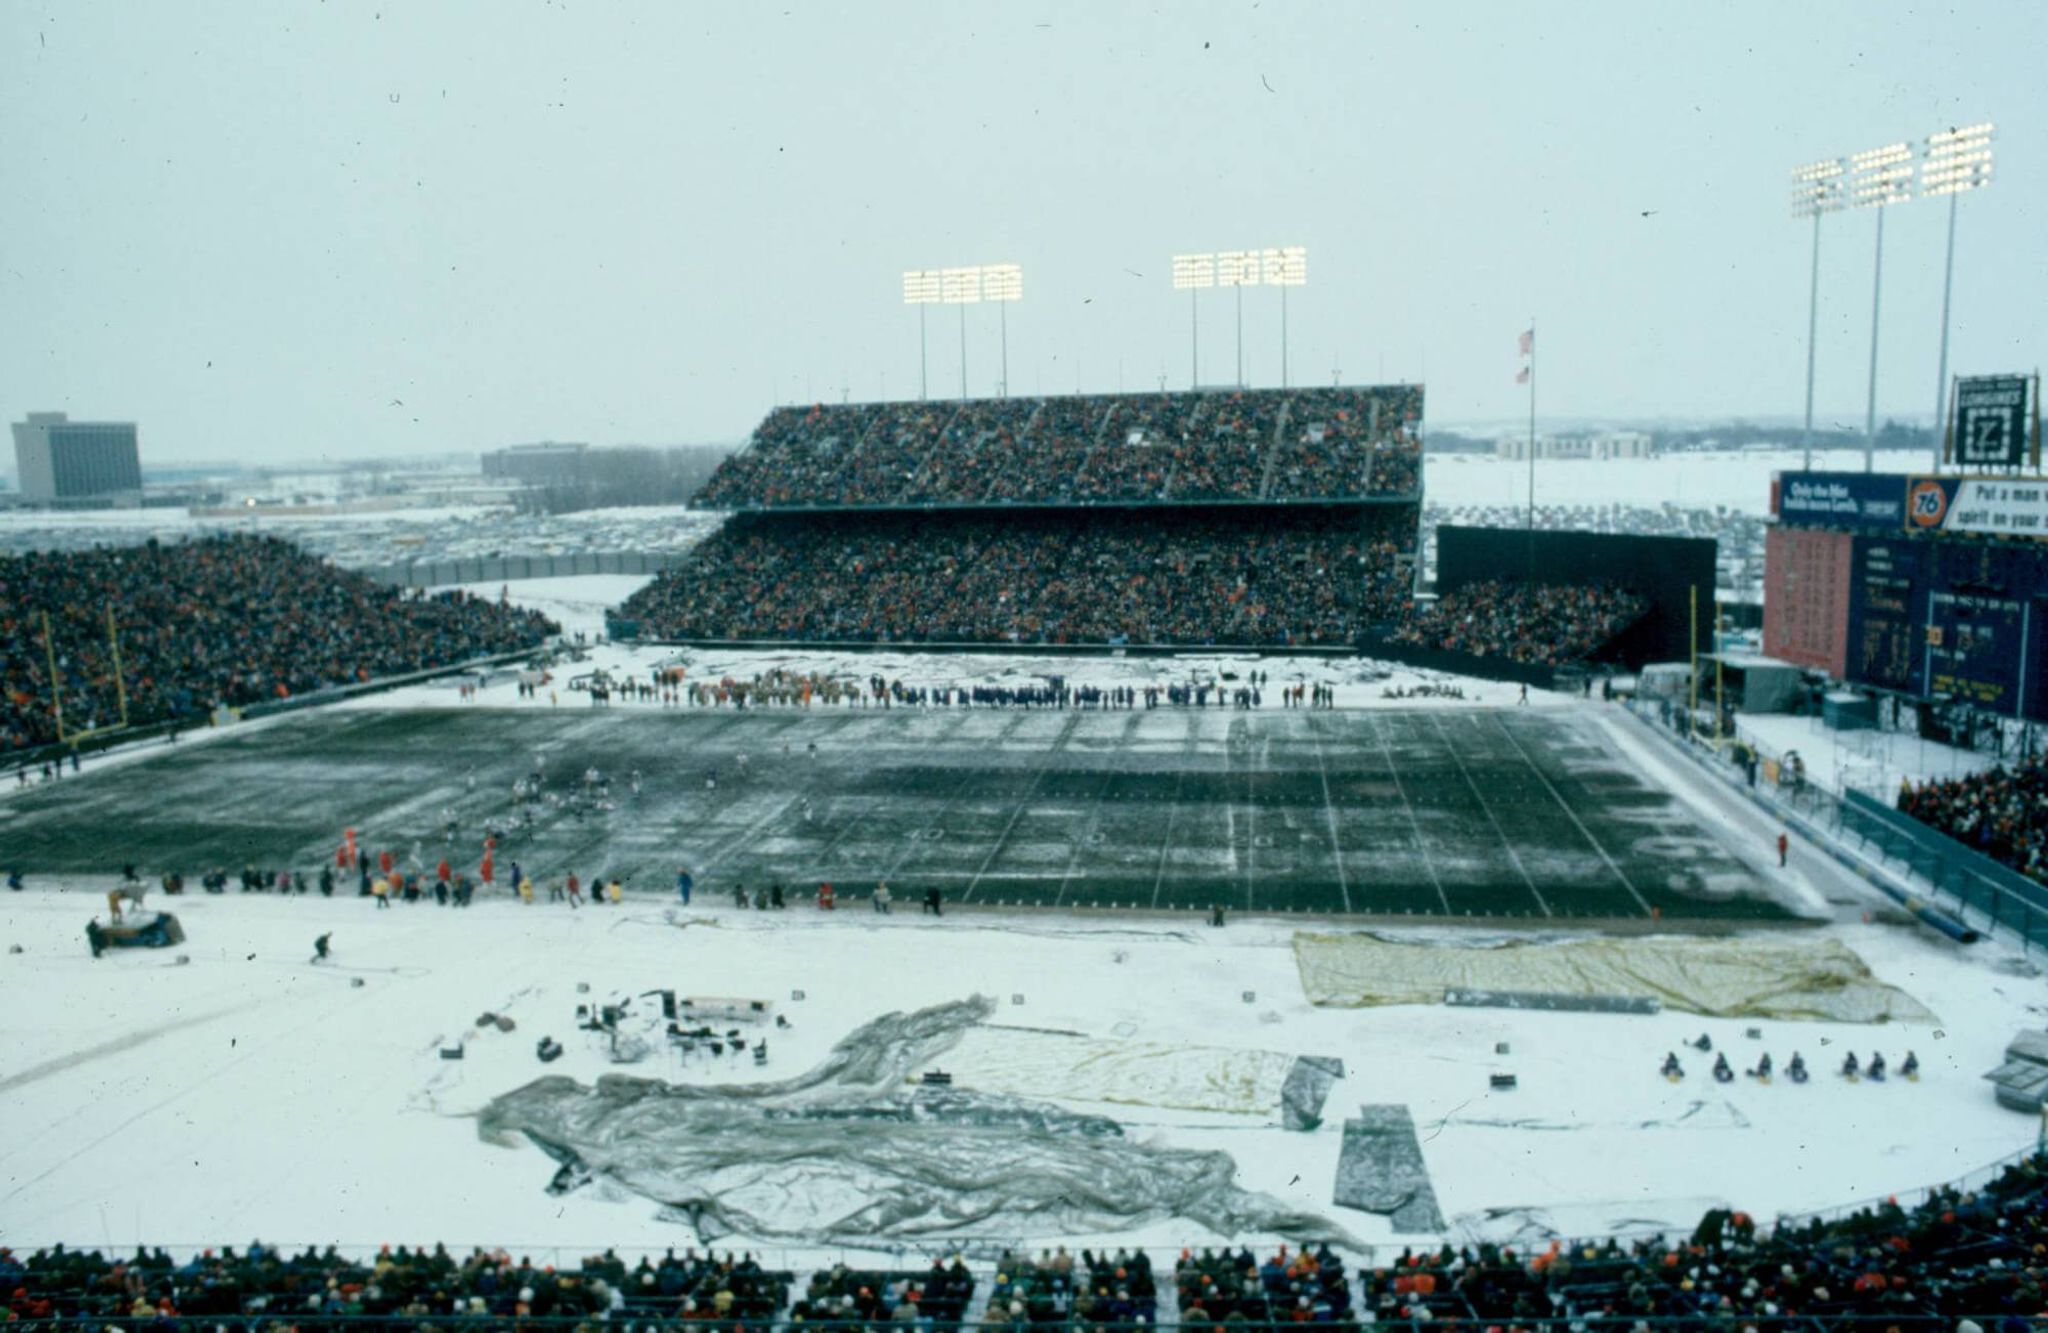 Snowy football stadium